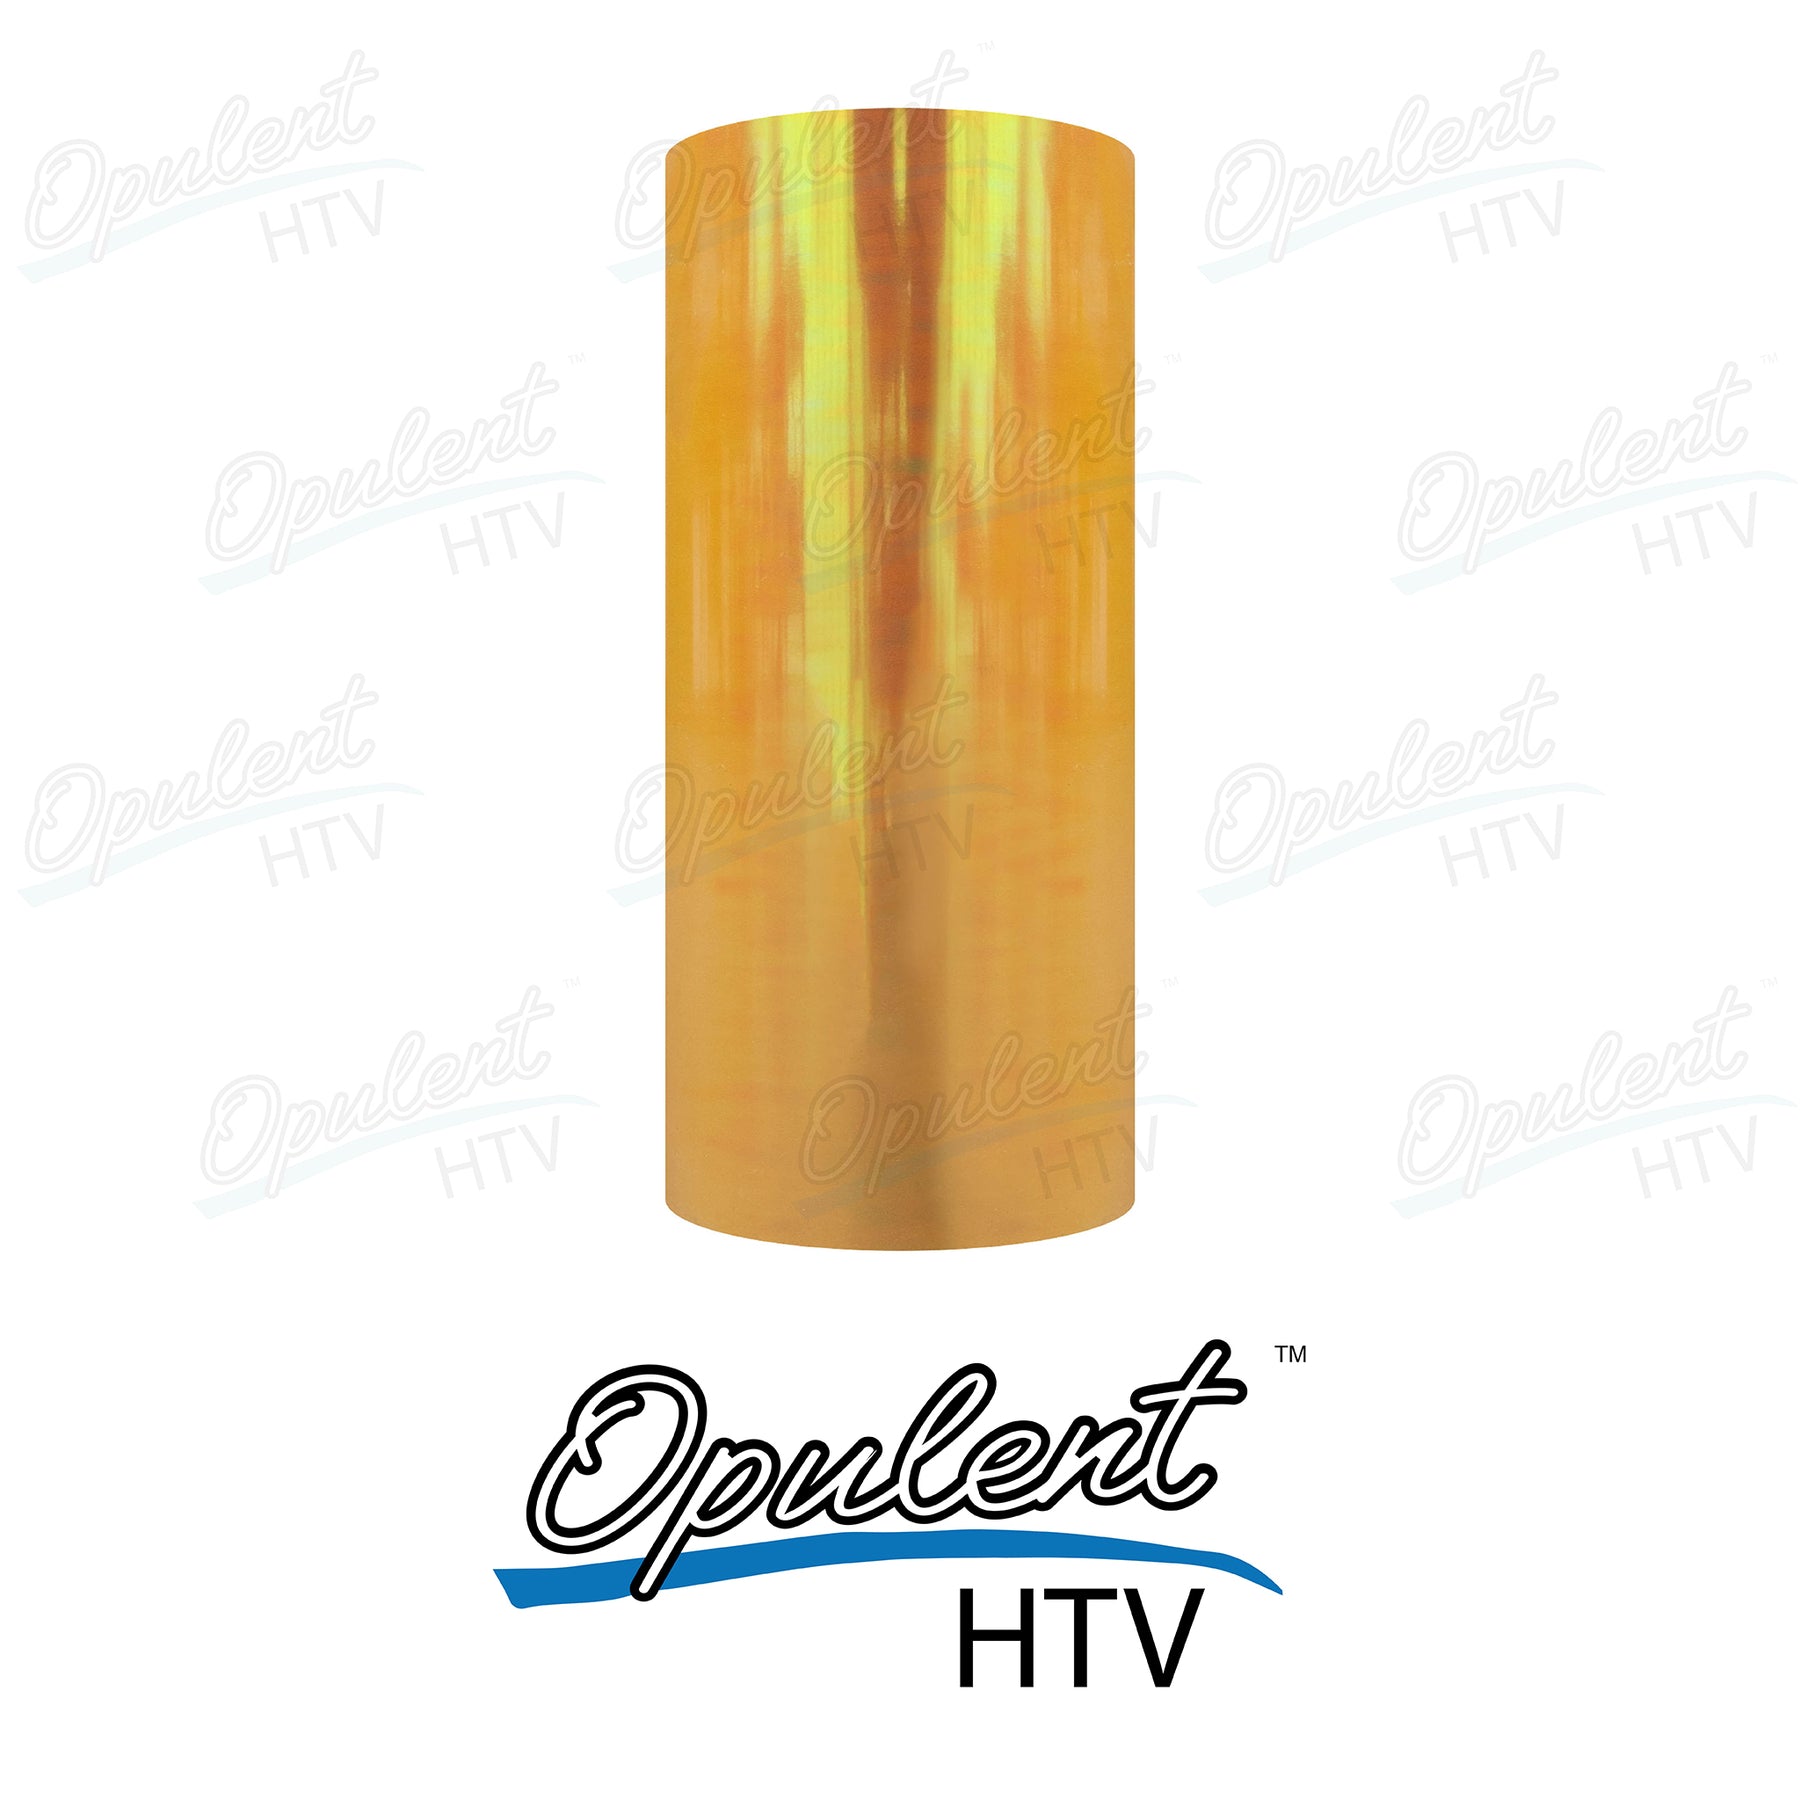 Opulent® HTV - Opal 12inchx12inch